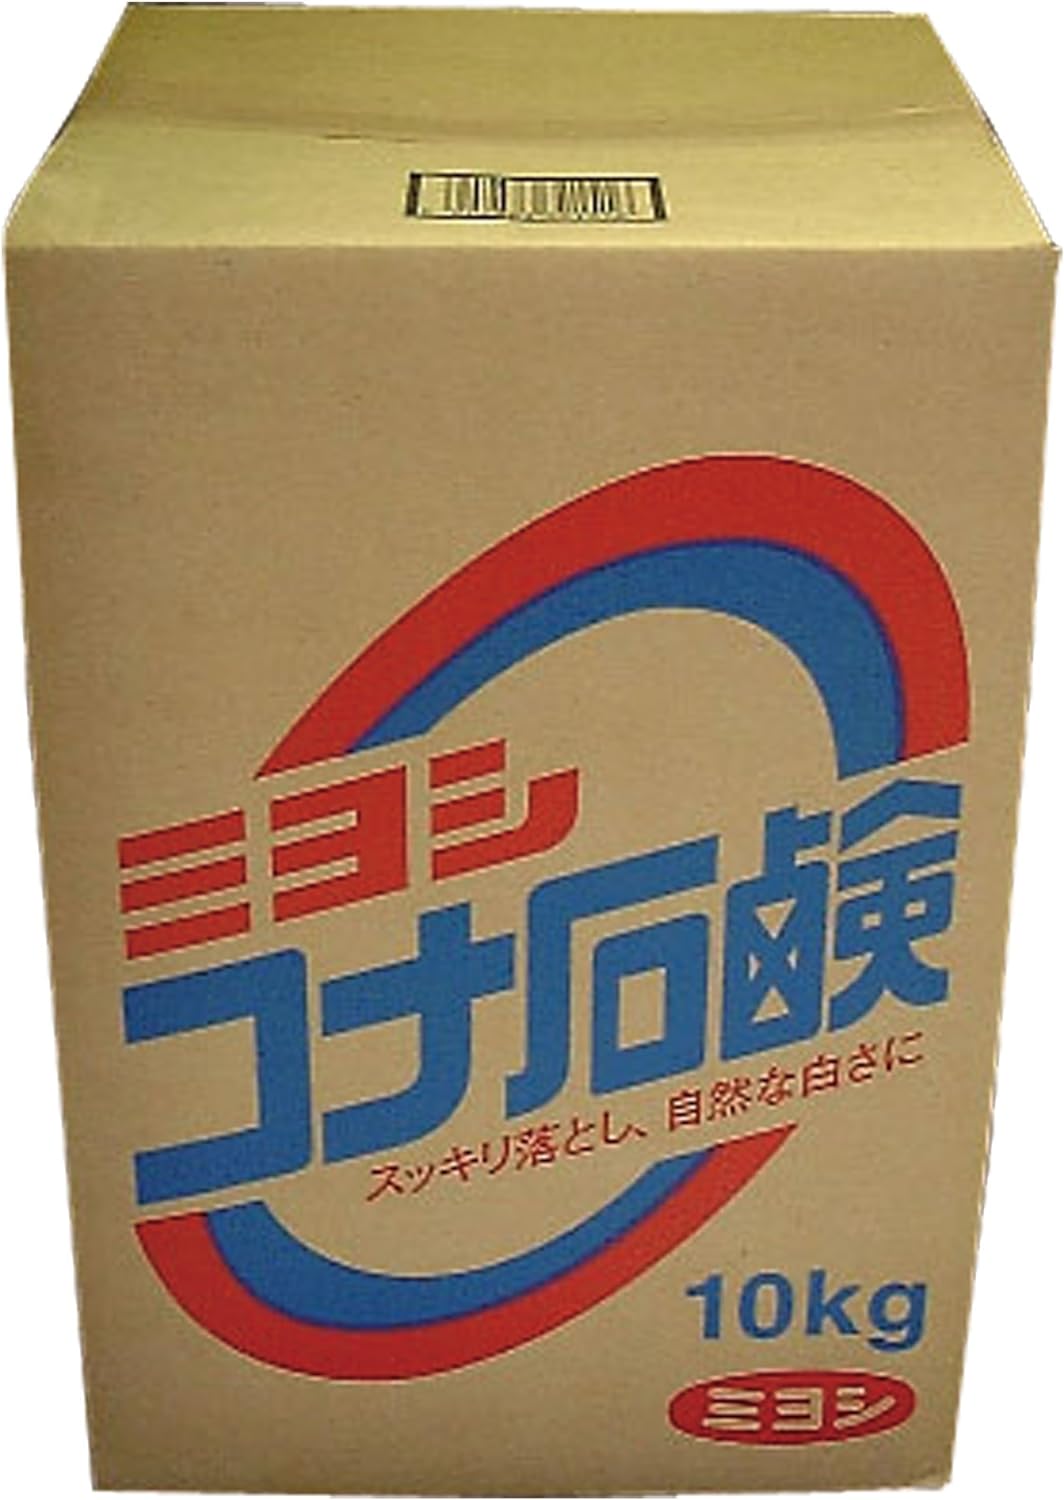 miyosi flour soap flour soap 10kg